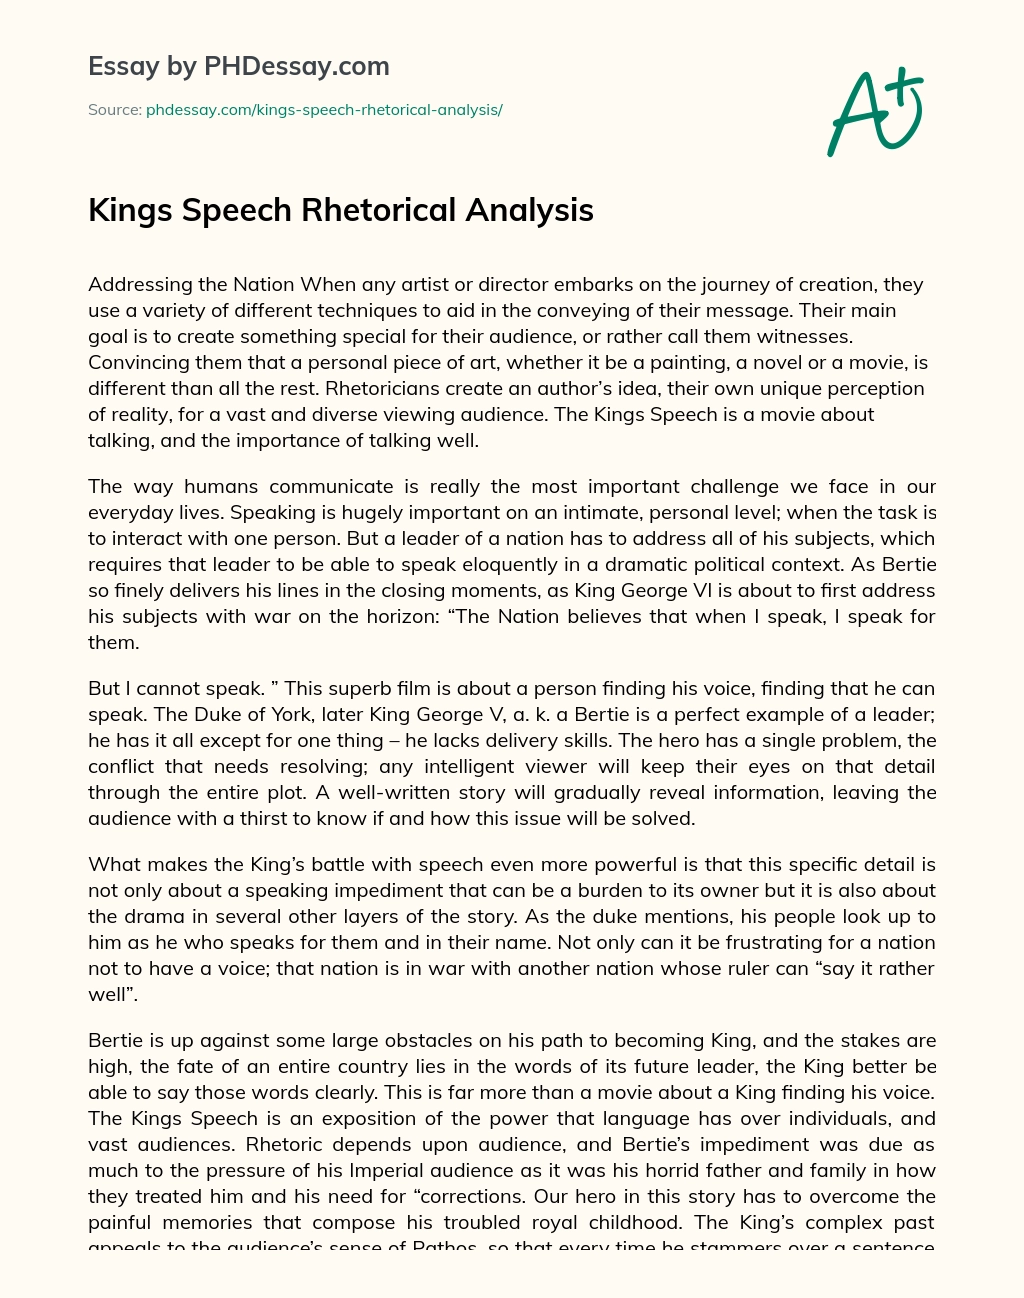 Kings Speech Rhetorical Analysis essay